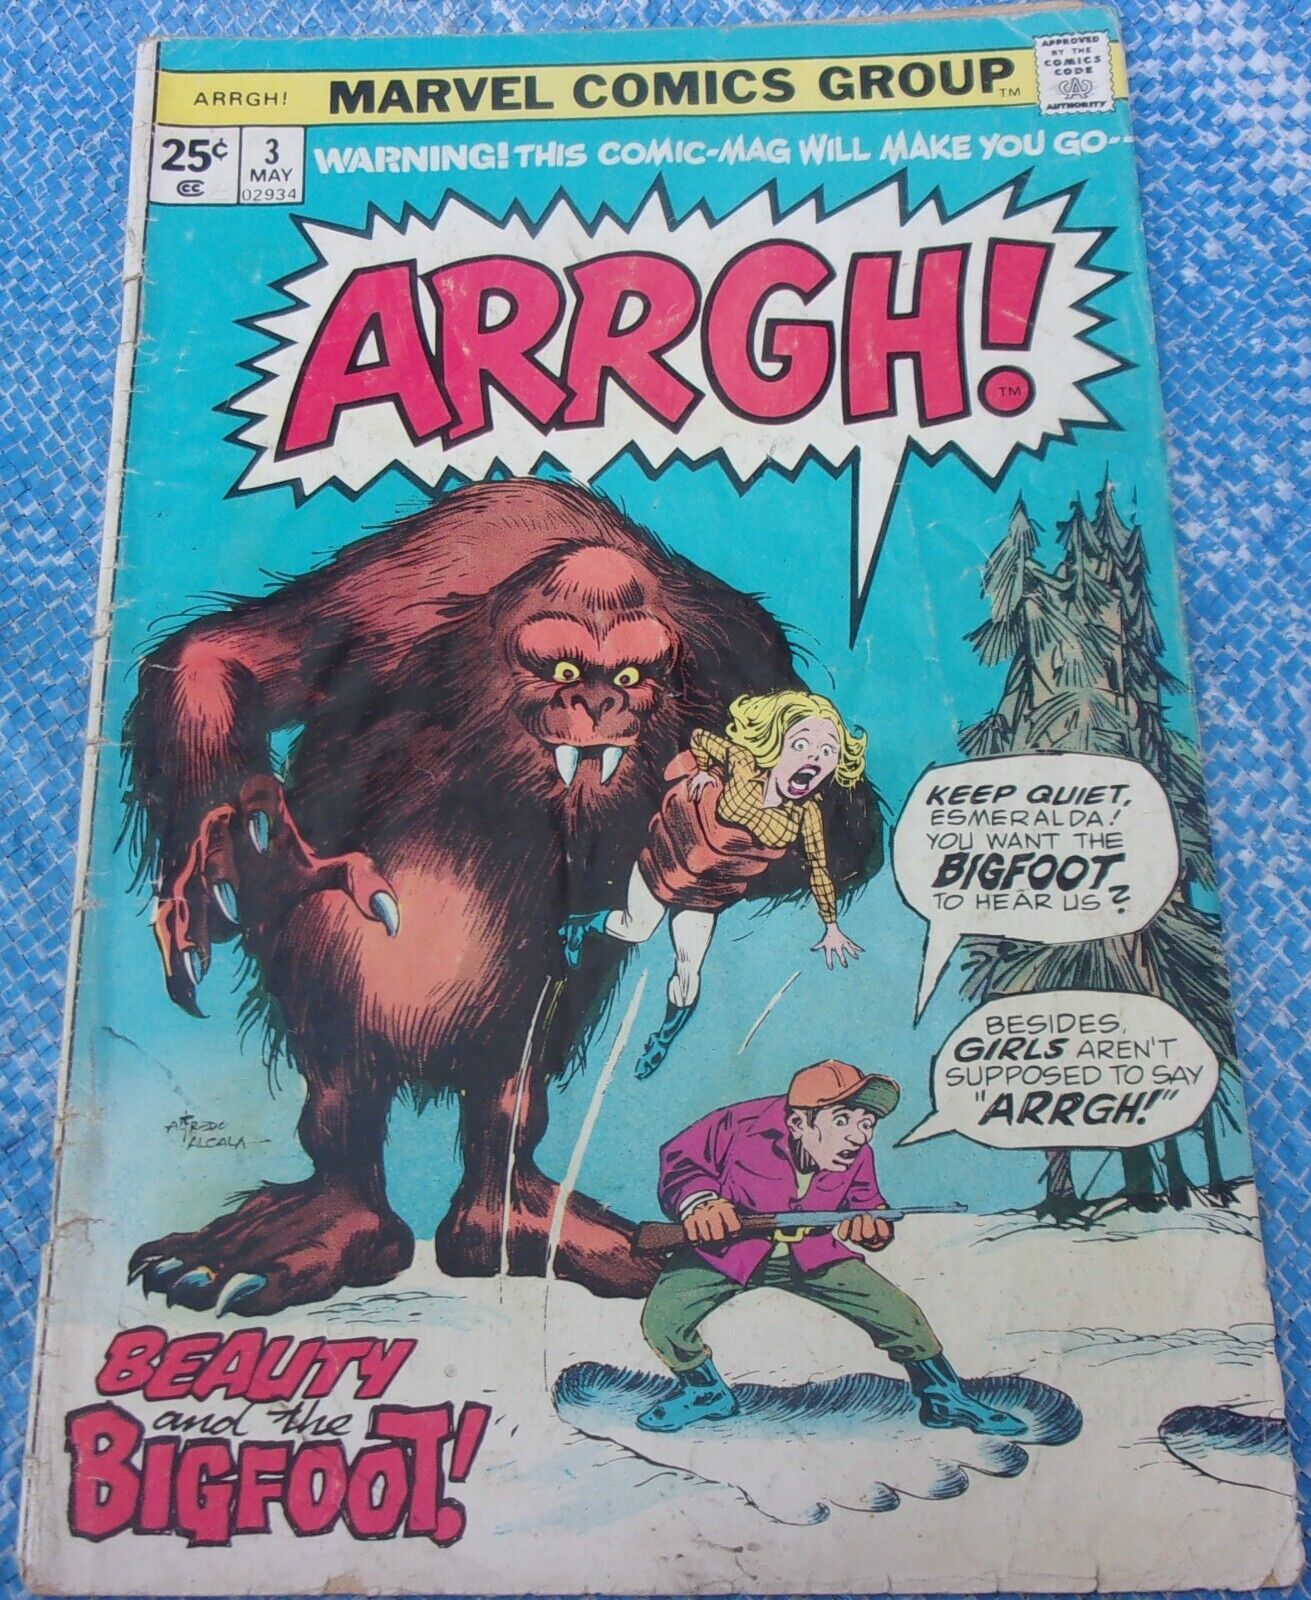 Marvel Comics Group Arrgh #3 May 1975 Beauty And The Bigfoot Alfredo Alcala